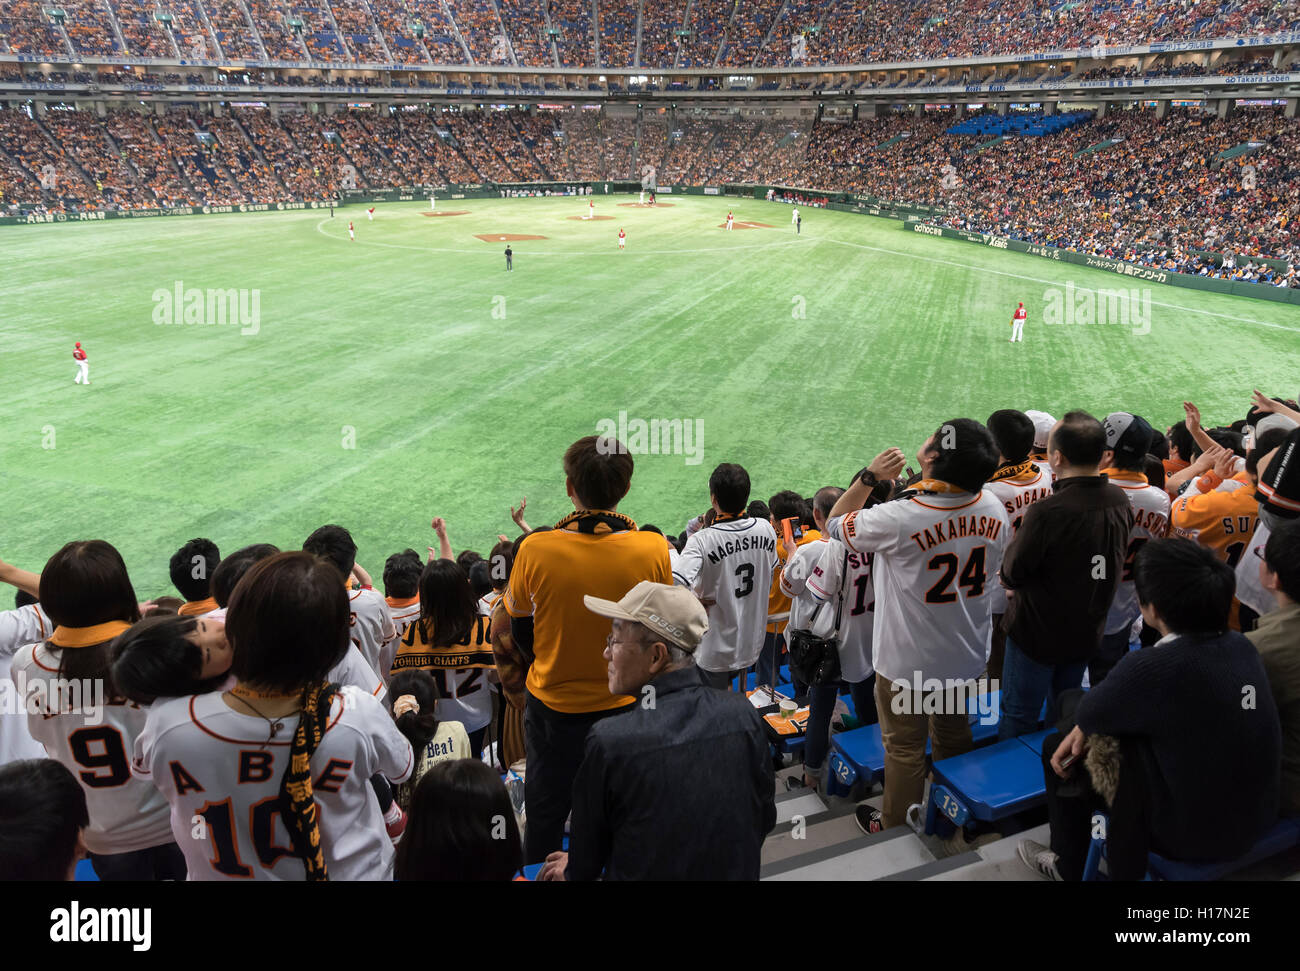 Supporters of Yomiuri Giants baseball team at Tokyo Dome stadium, Japan Stock Photo